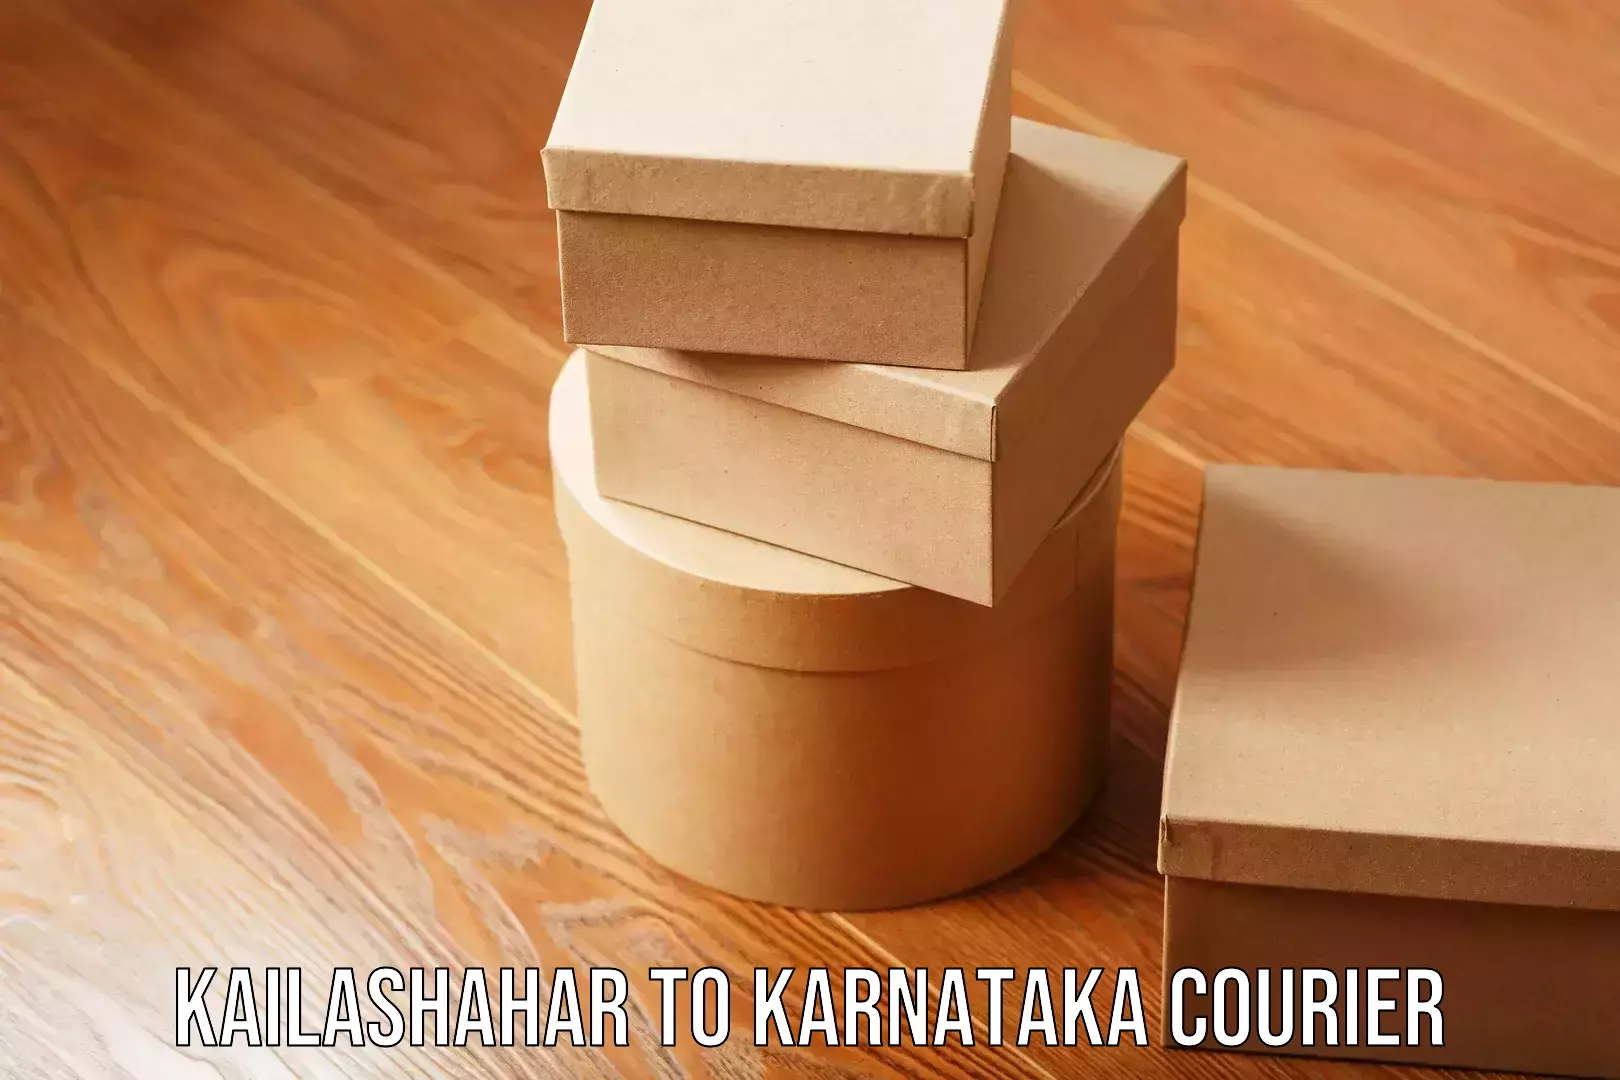 Subscription-based courier in Kailashahar to Karnataka